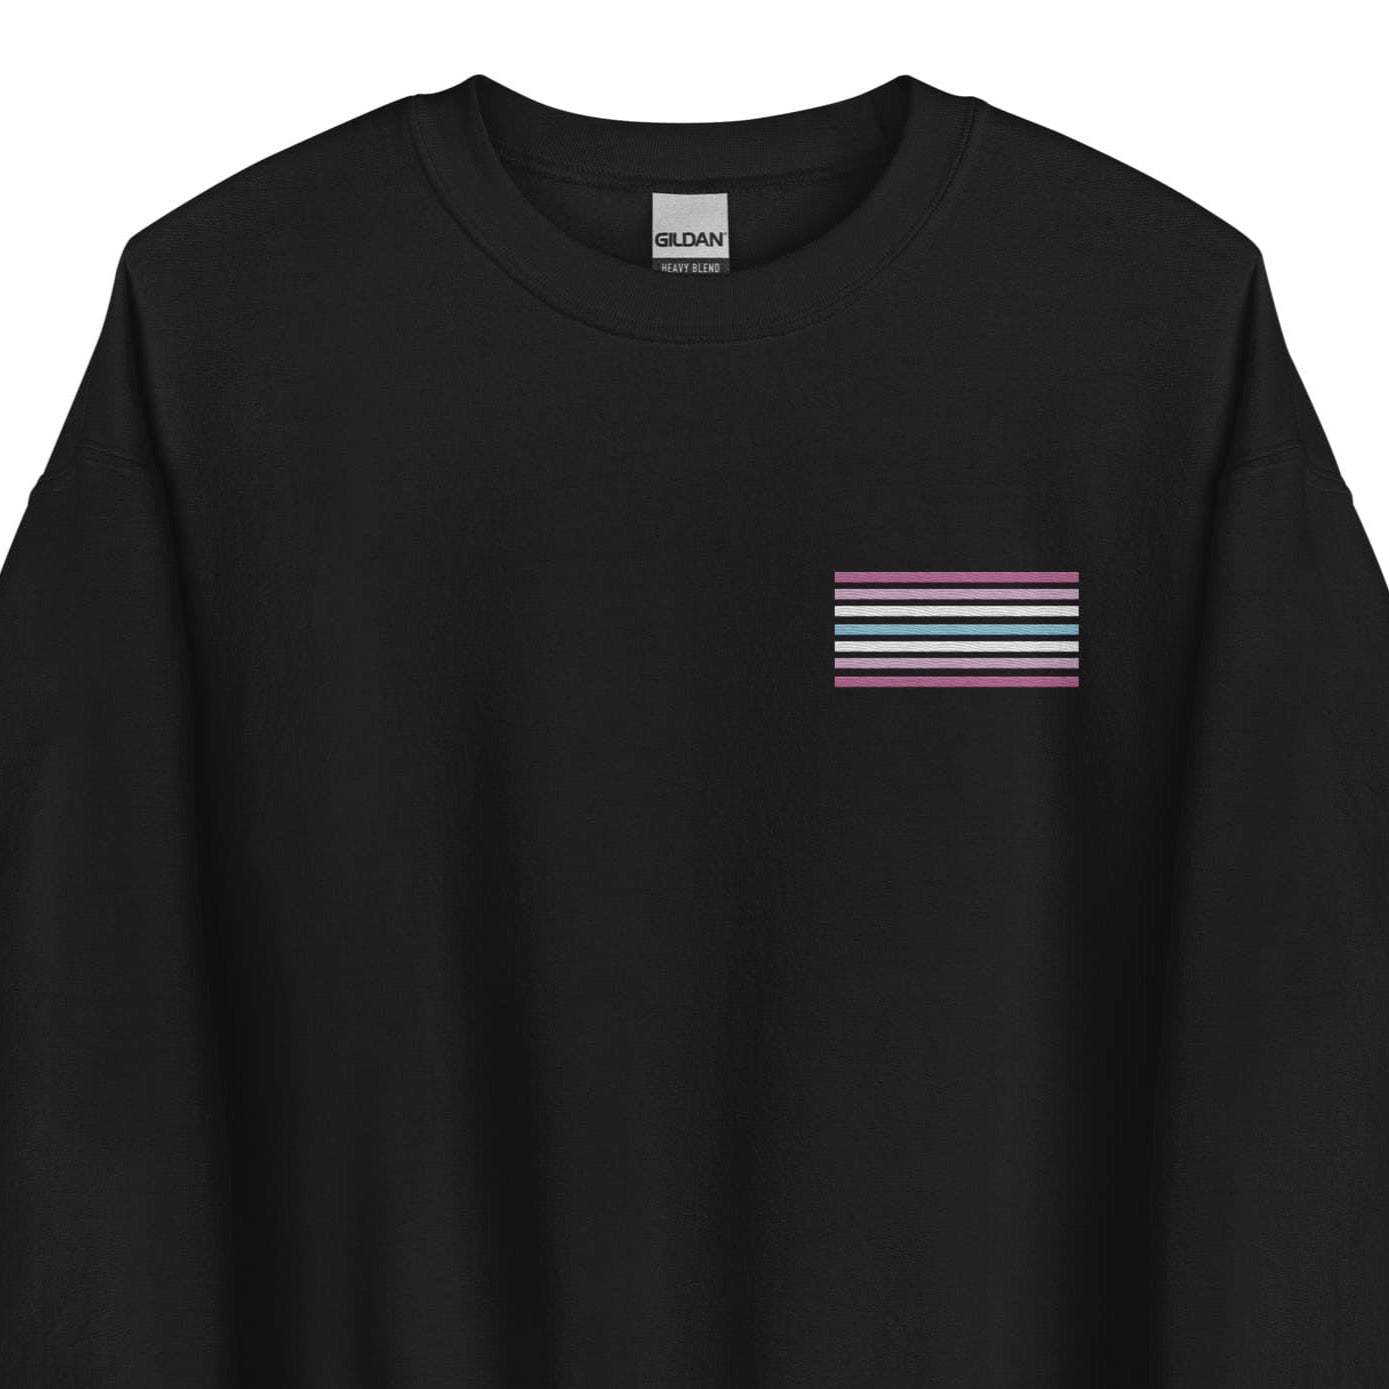 femboy sweatshirt, subtle femboi pride flag embroidered pocket design sweater, main